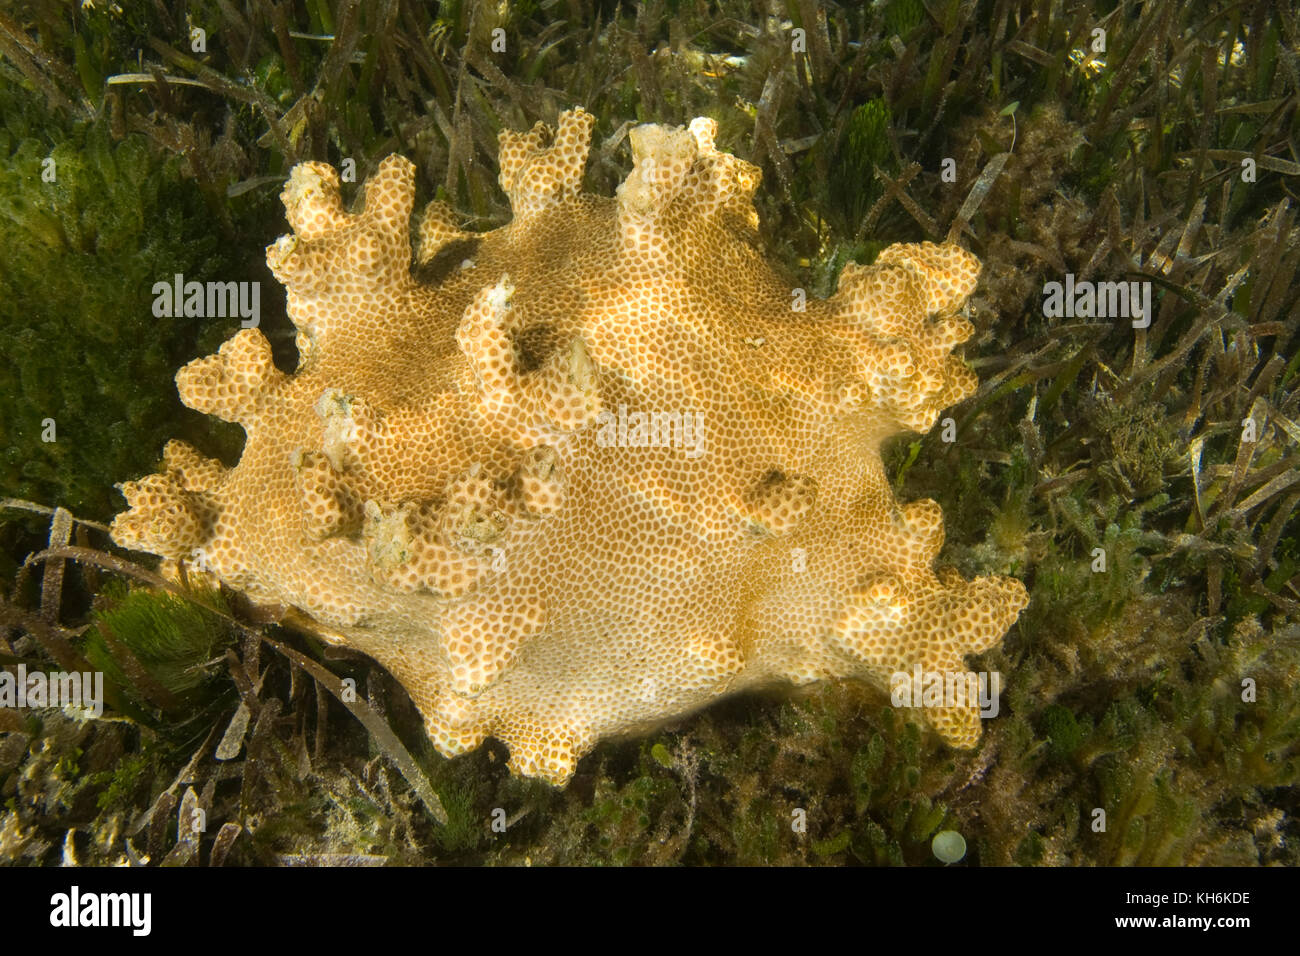 Knobby Star Coral, Solenastrea hyades, in Turtle Grass Bett, Florida Keys National Marine Sanctuary, Islamorada, Florida Keys, Florida.. Stockfoto